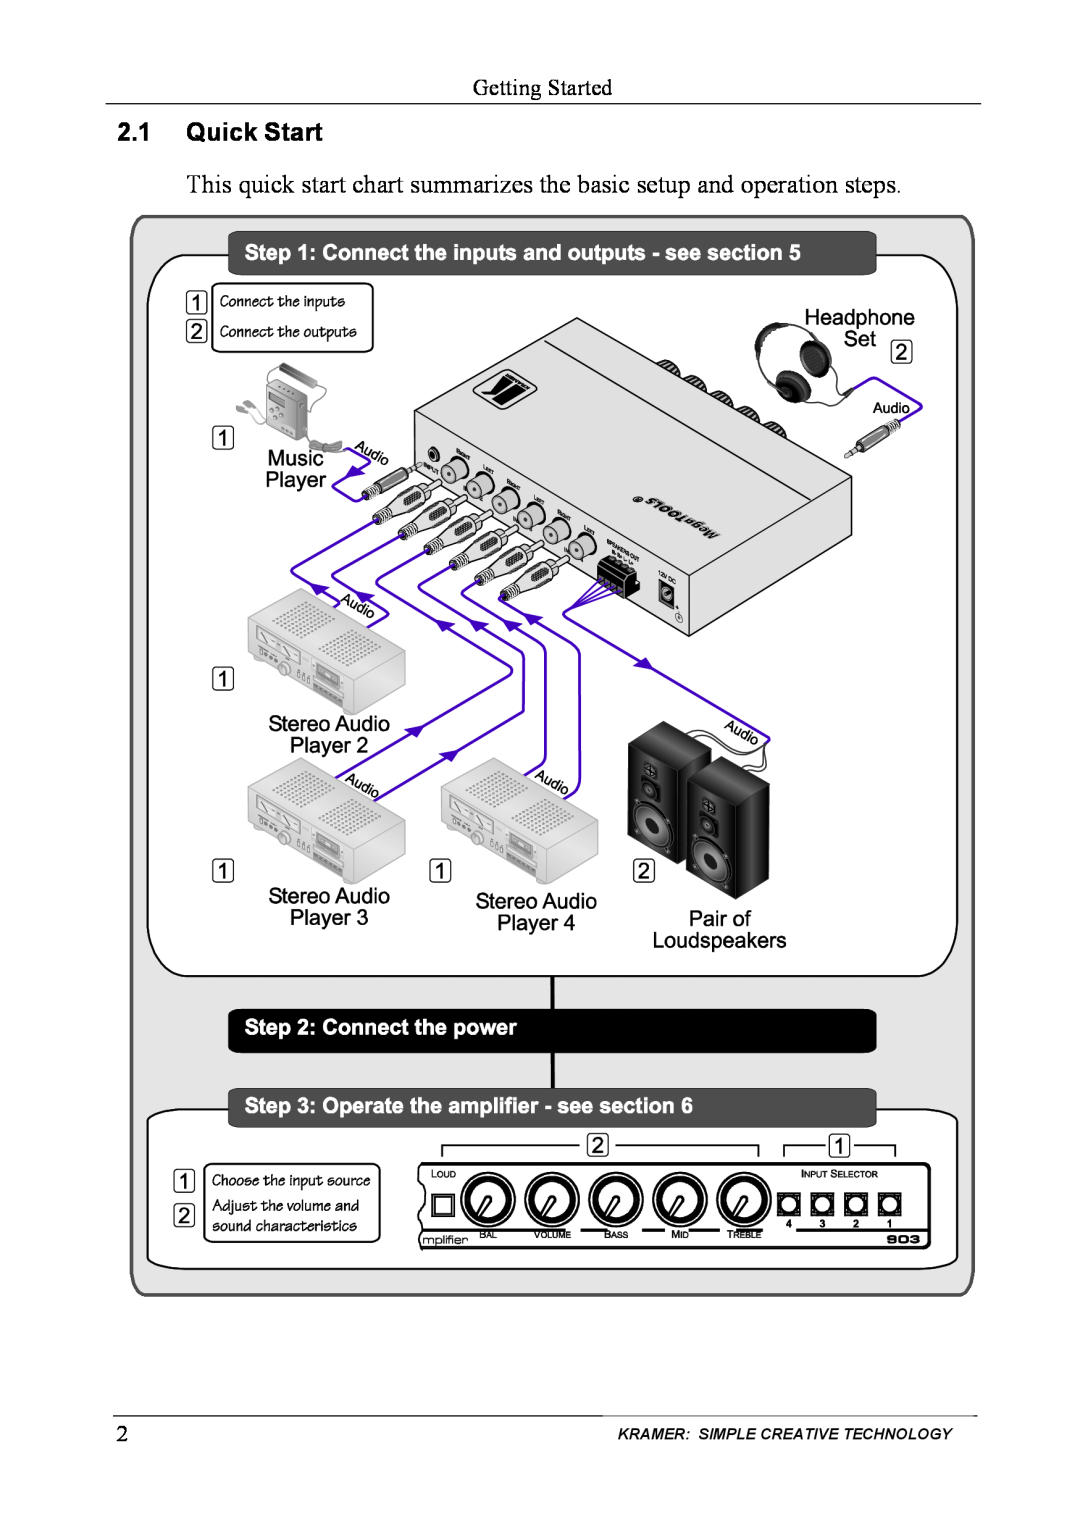 Kramer Electronics 903 user manual 2.1Quick Start, Getting Started, Kramer: Simple Creative Technology 